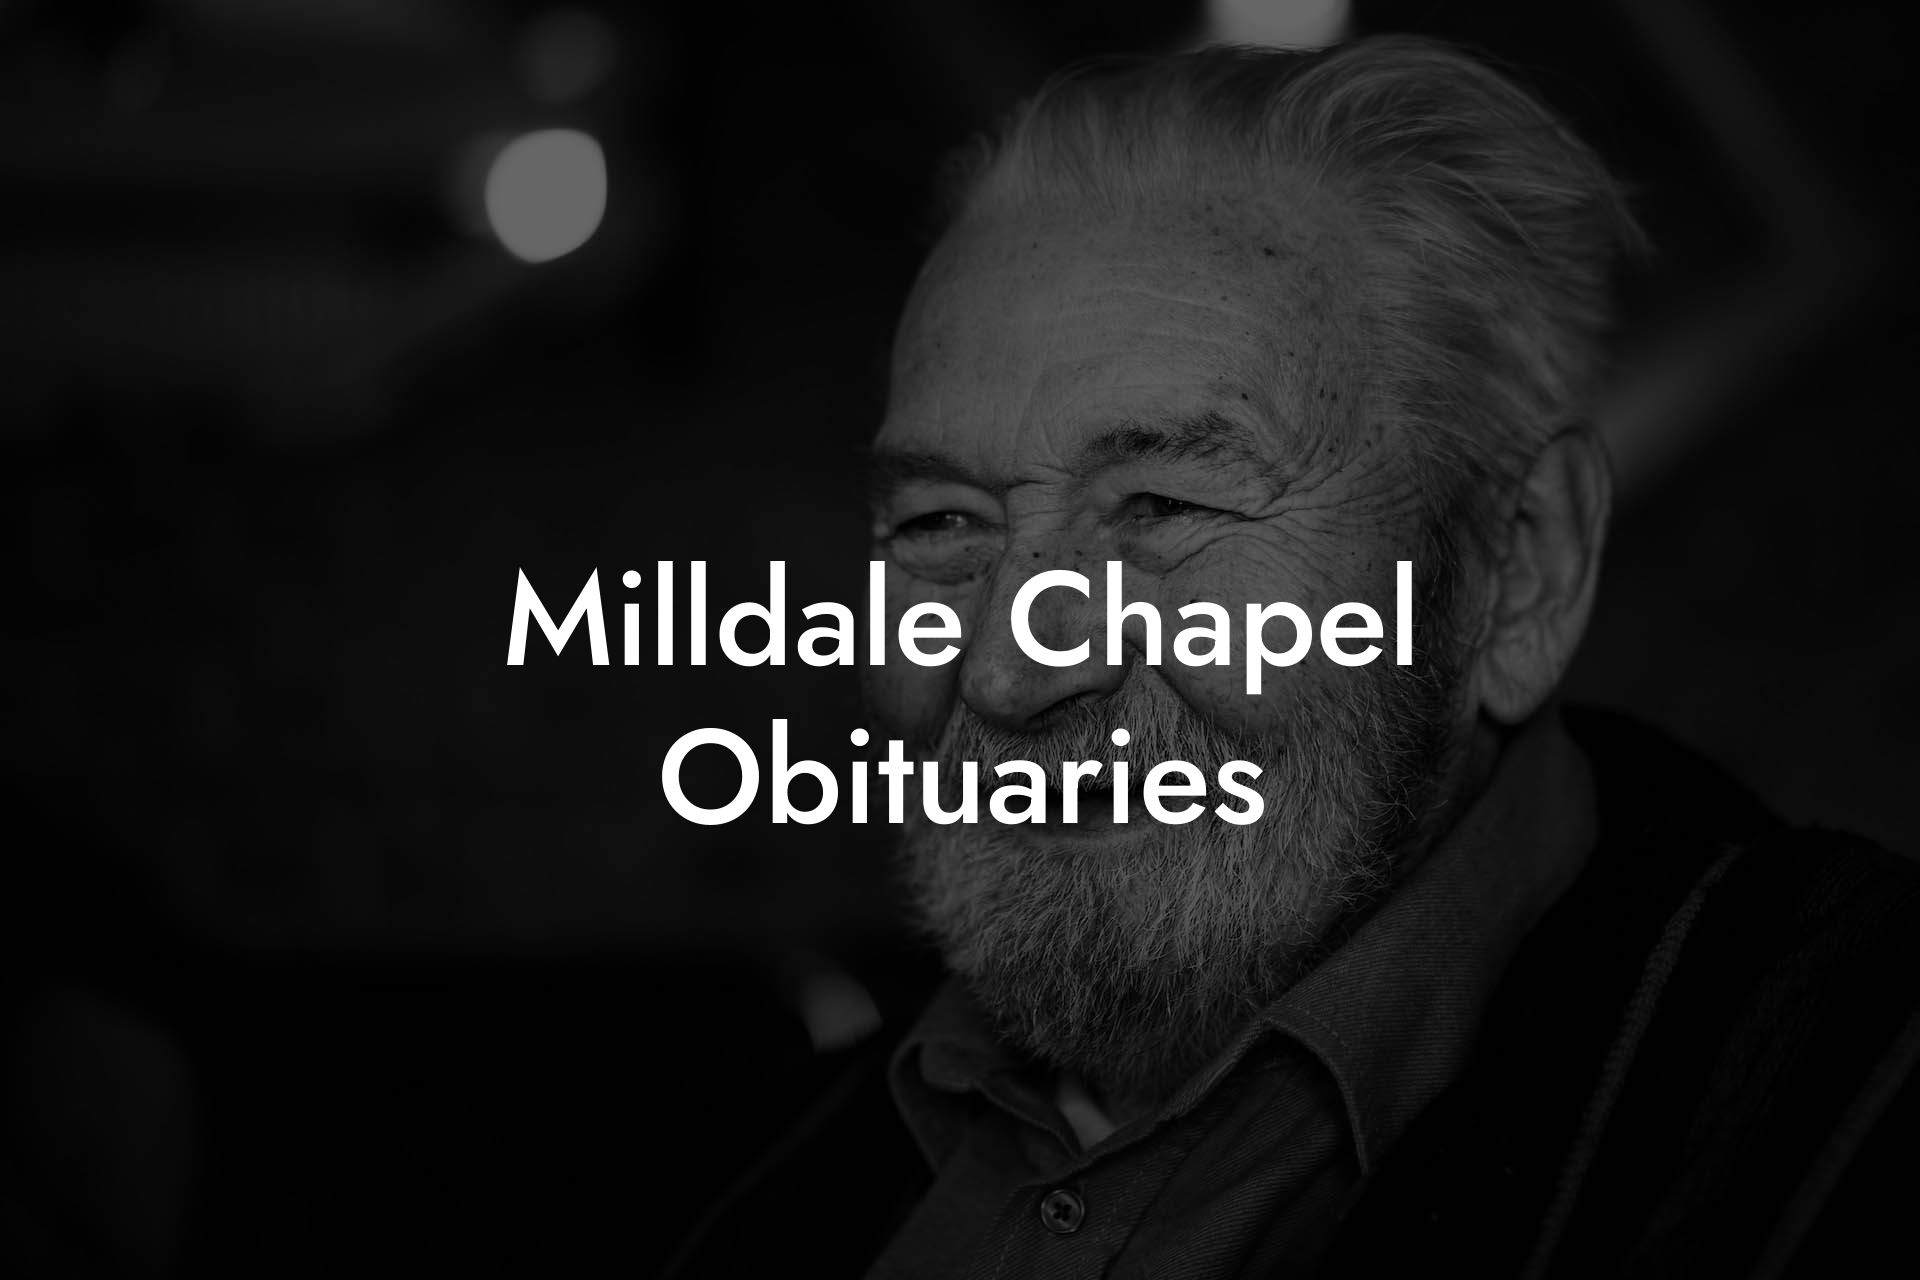 Milldale Chapel Obituaries